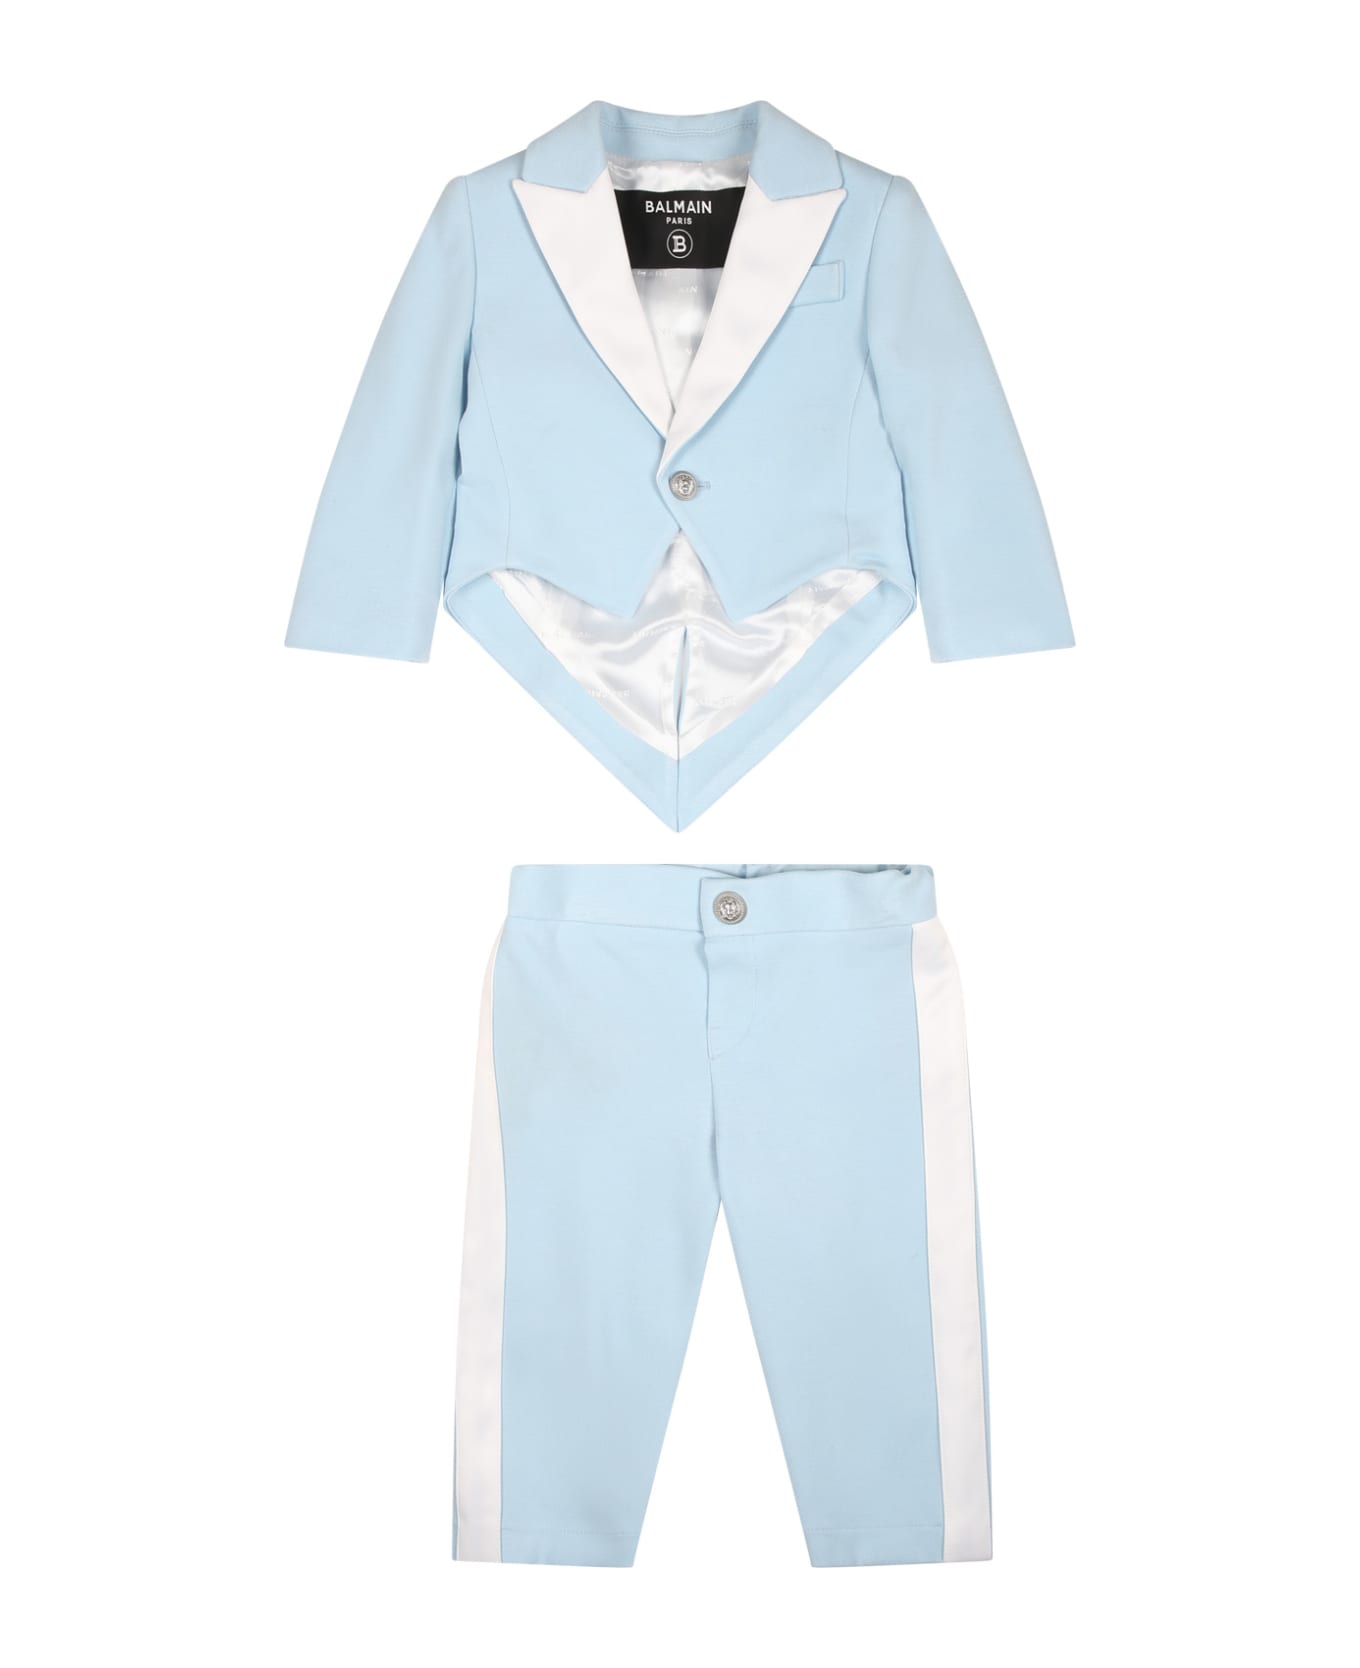 Balmain Elegant Sky Blue Suit For Baby Boy With Logo - Light Blue